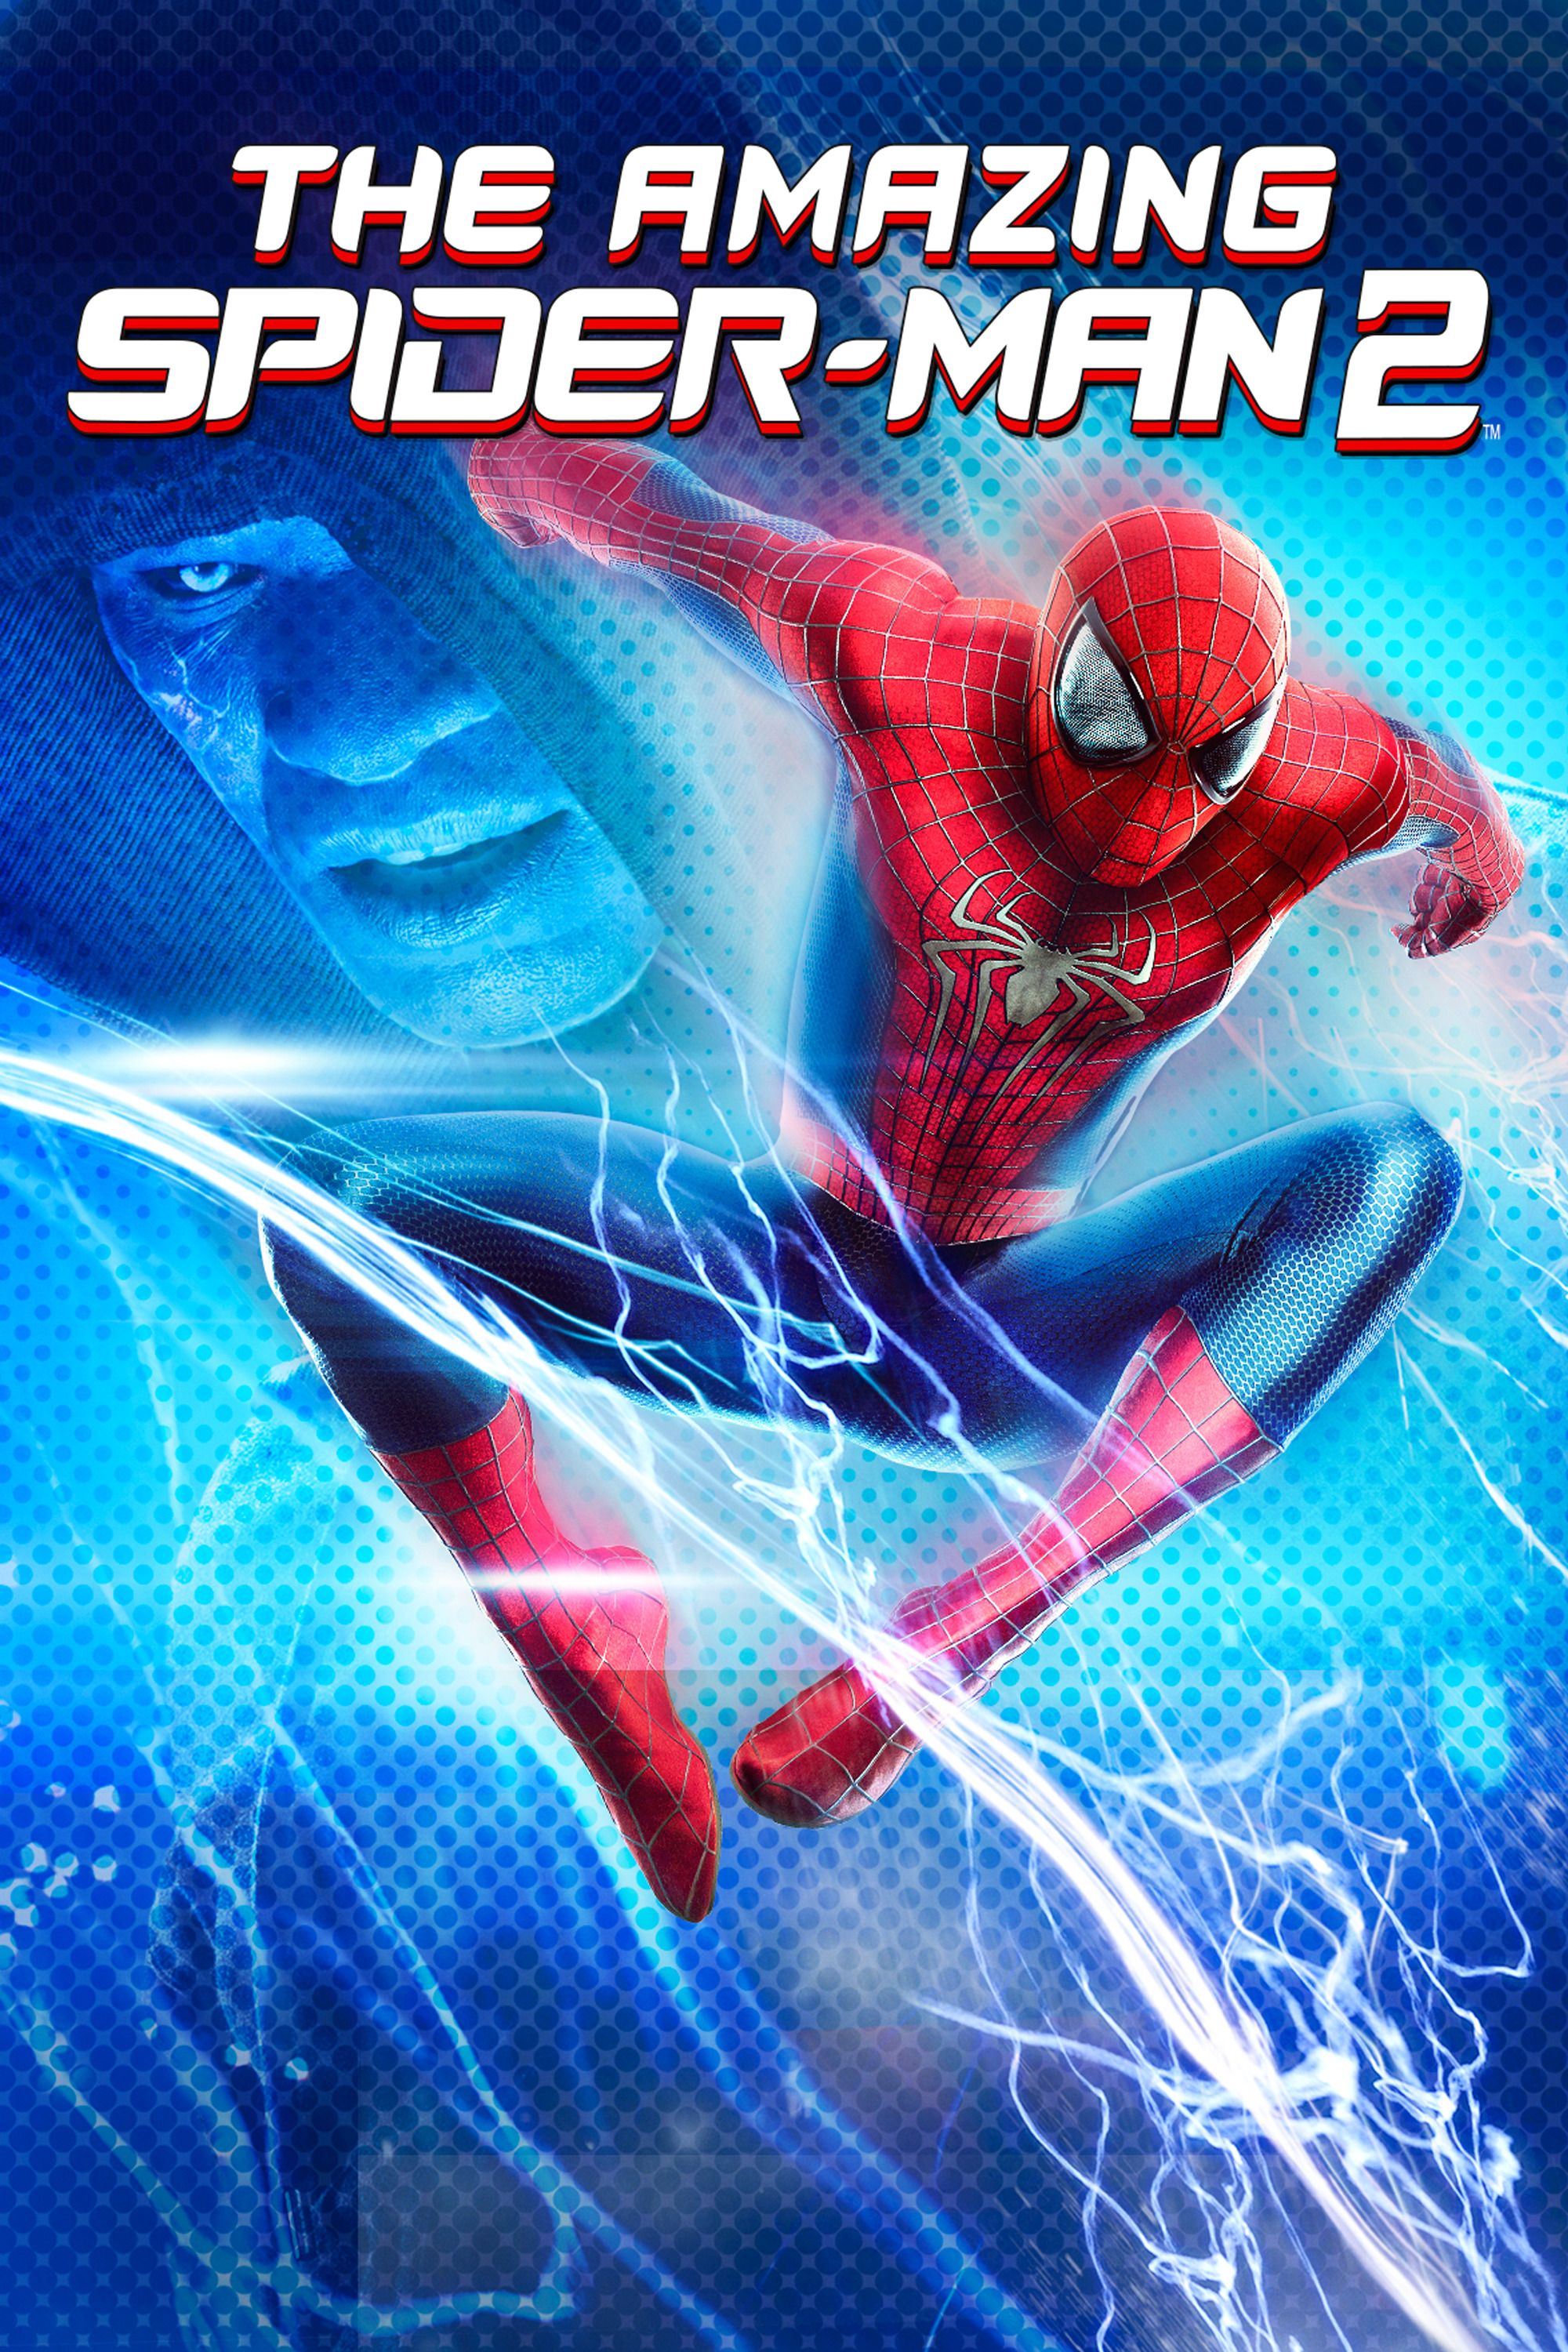 watch online movies the amazing spider man full movie